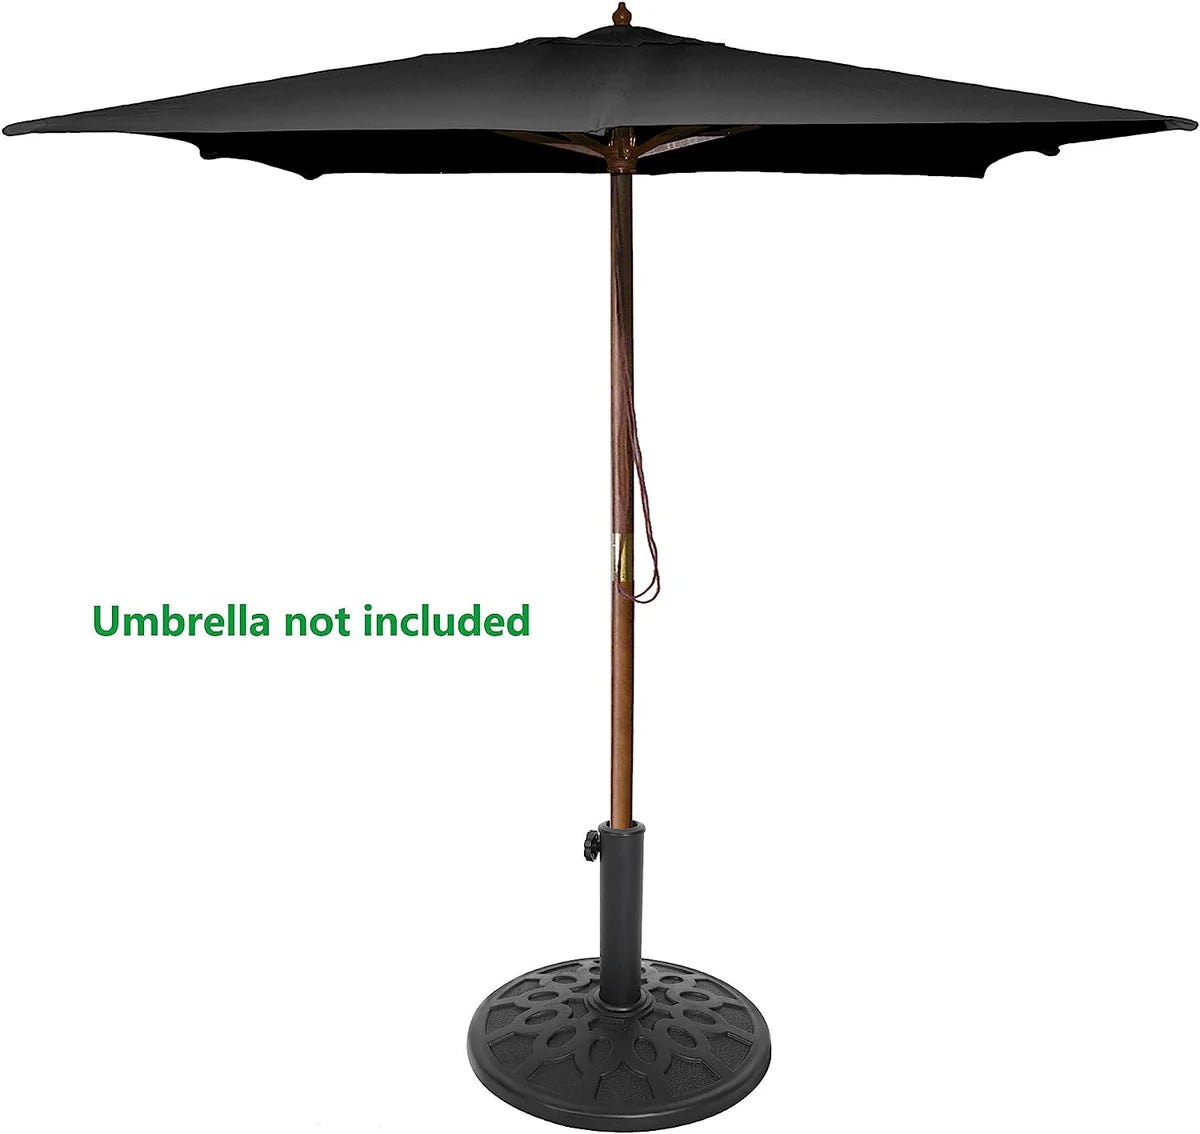 17" Umbrella Base Patio Outdoor Round Universal Stand Rust-Proof, Black